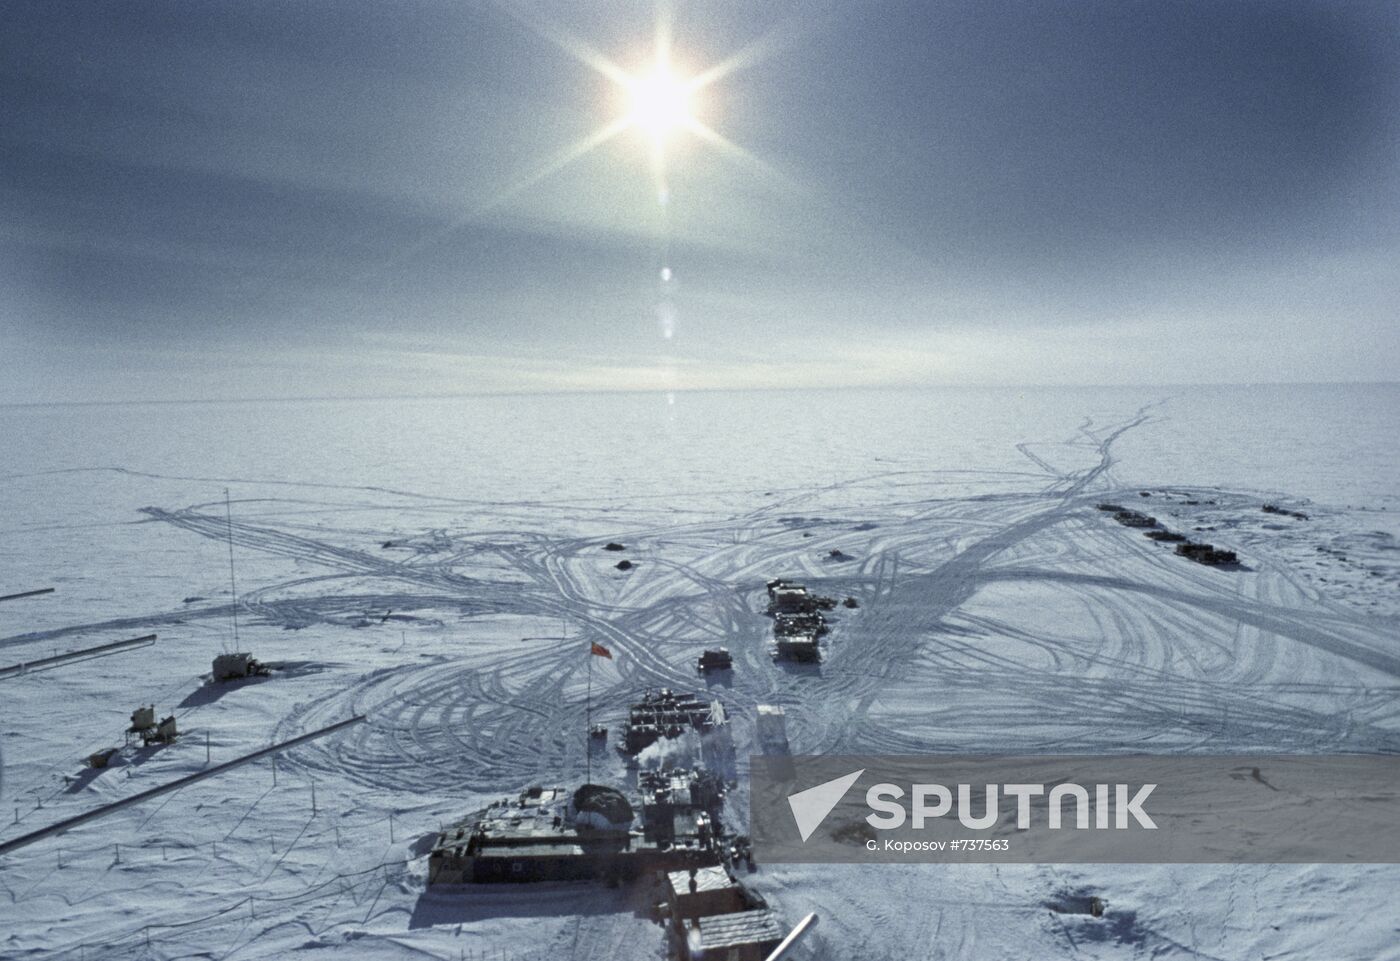 Antarctic research station "Vostok"